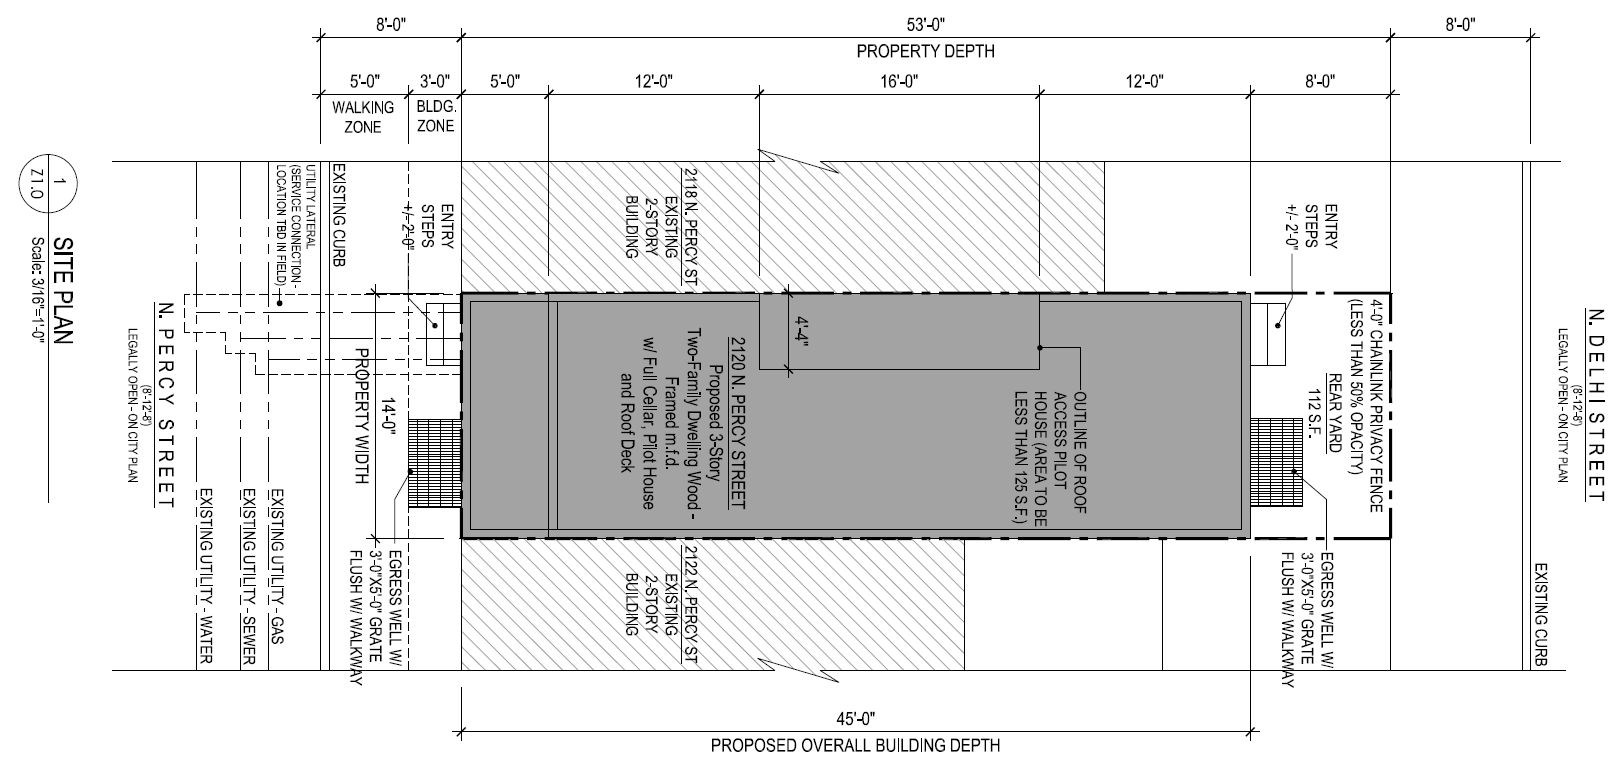 2120 North Percy Street. Site plan. Credit: 24 Seven Design Group via the City of Philadelphia